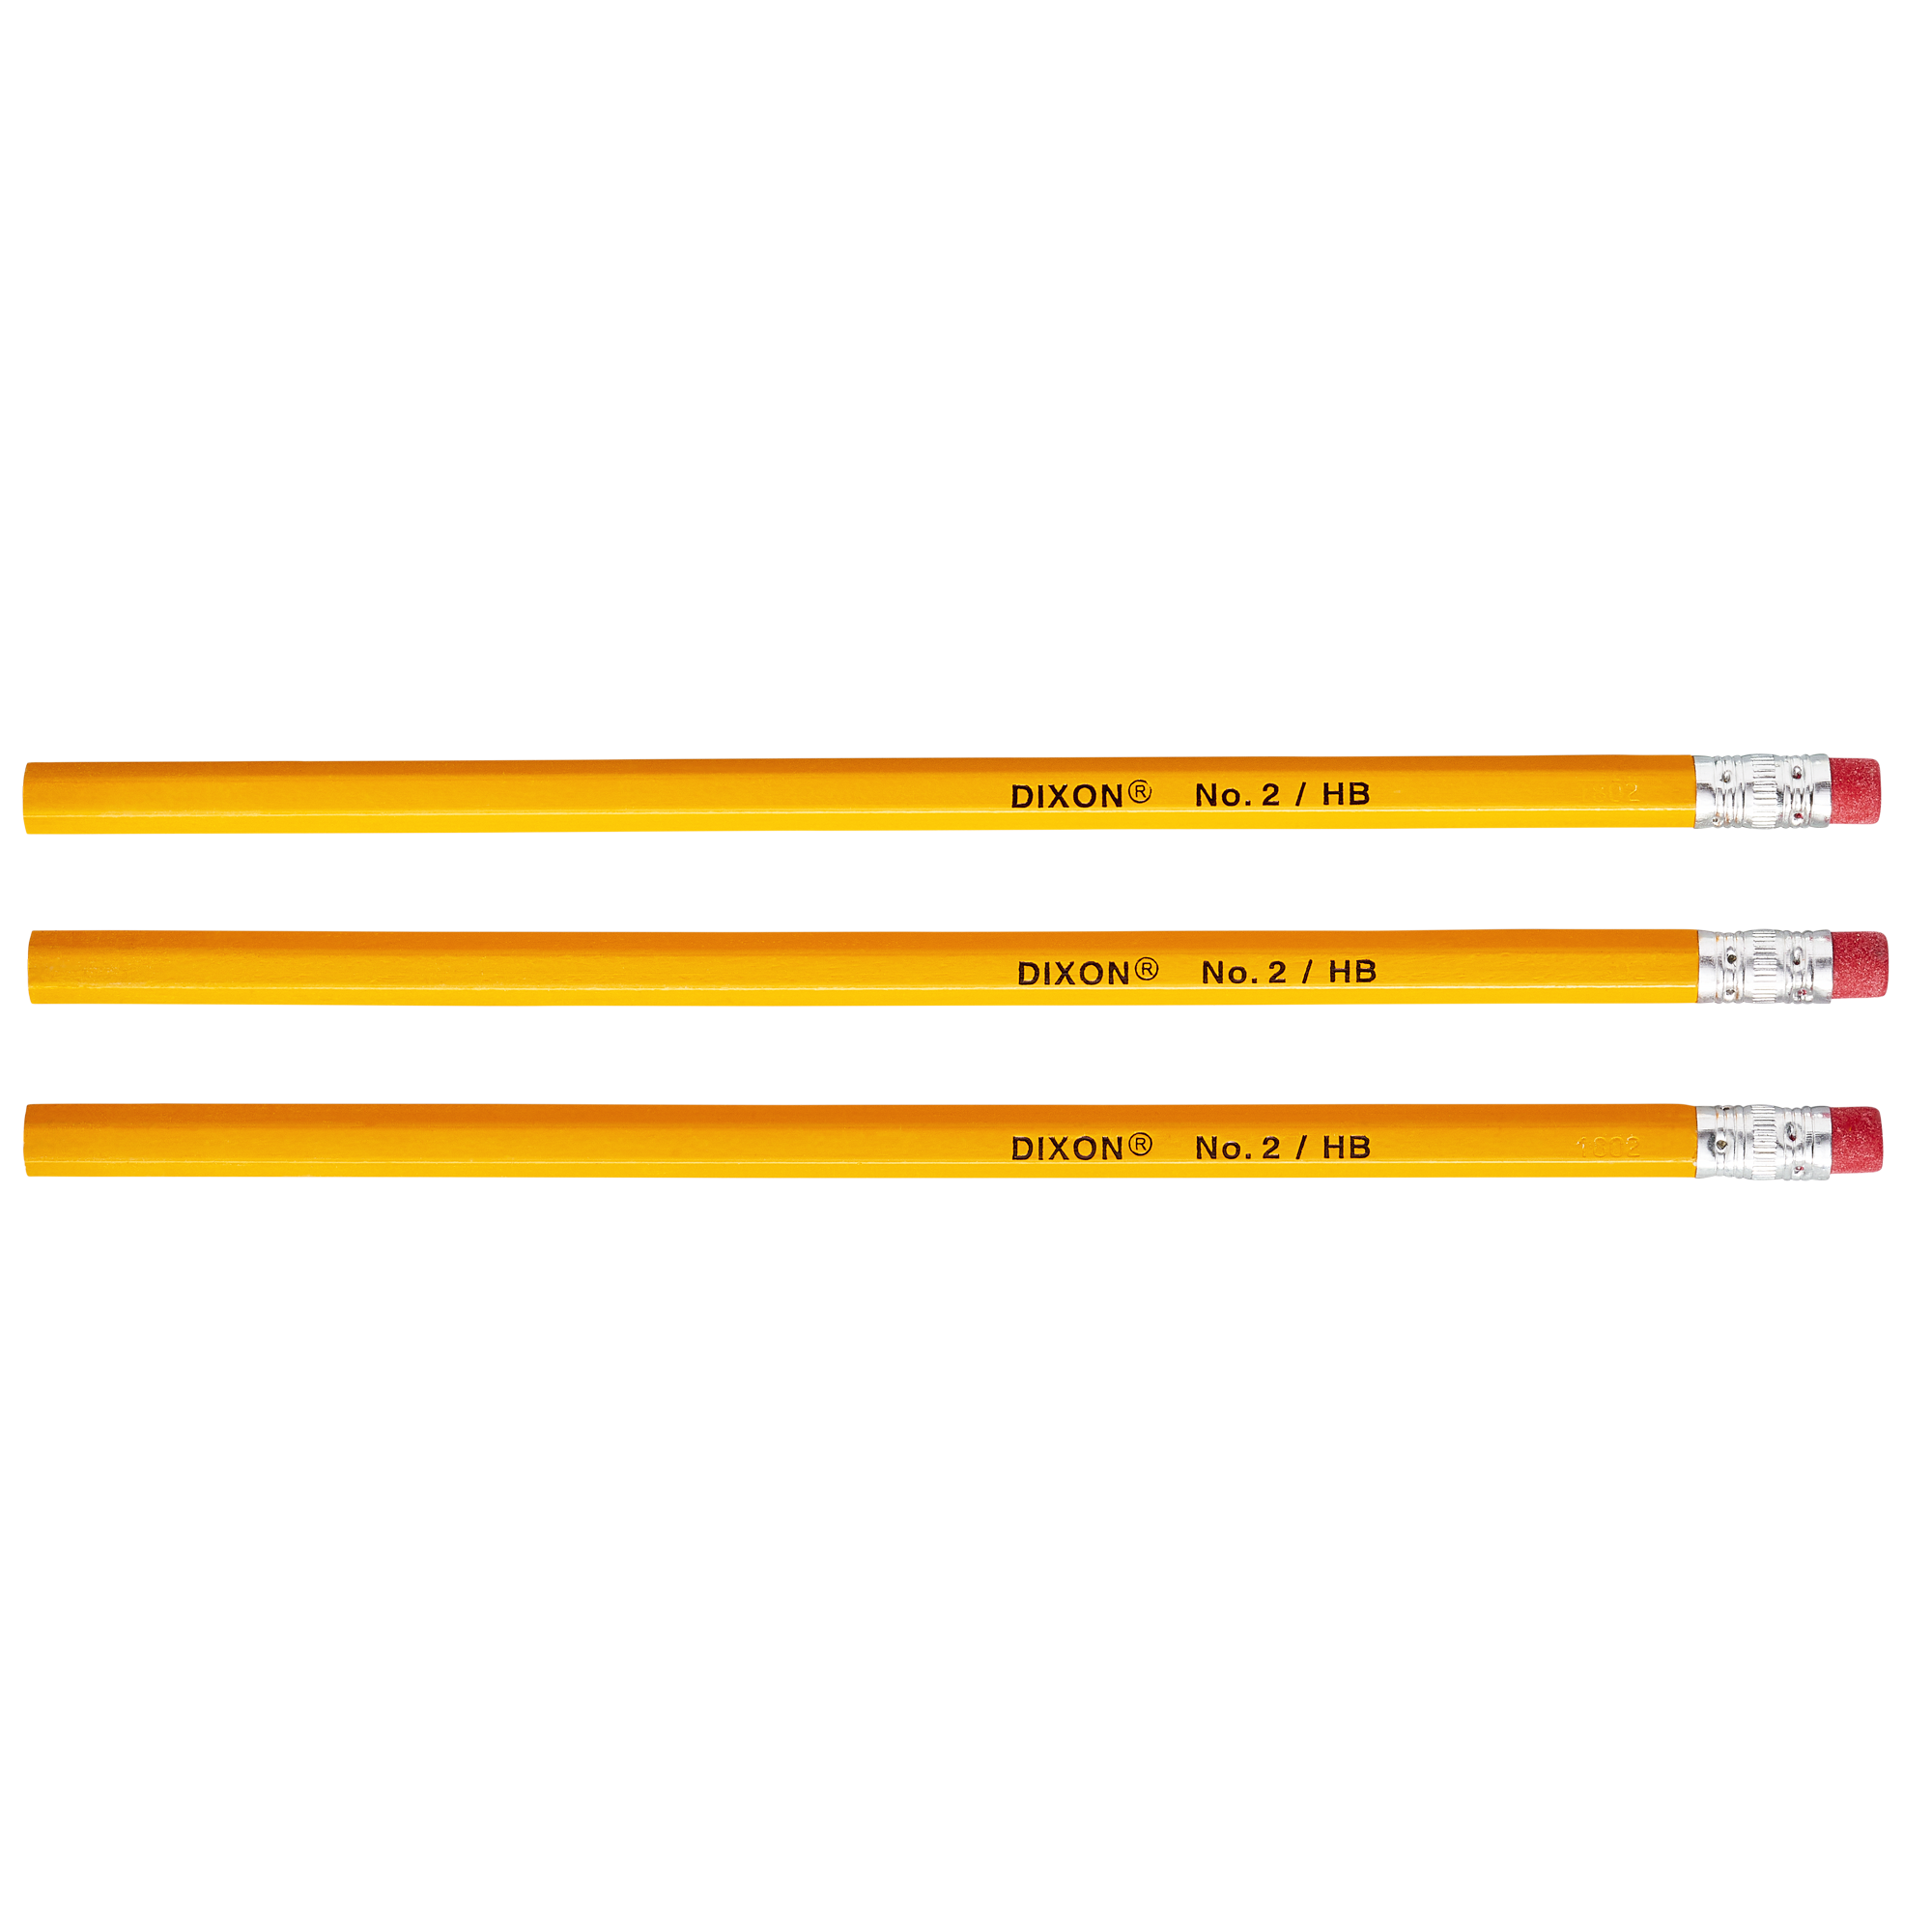 Dixon Pencil, Oriole, #2Hb, Yllw, PK72 12872PK